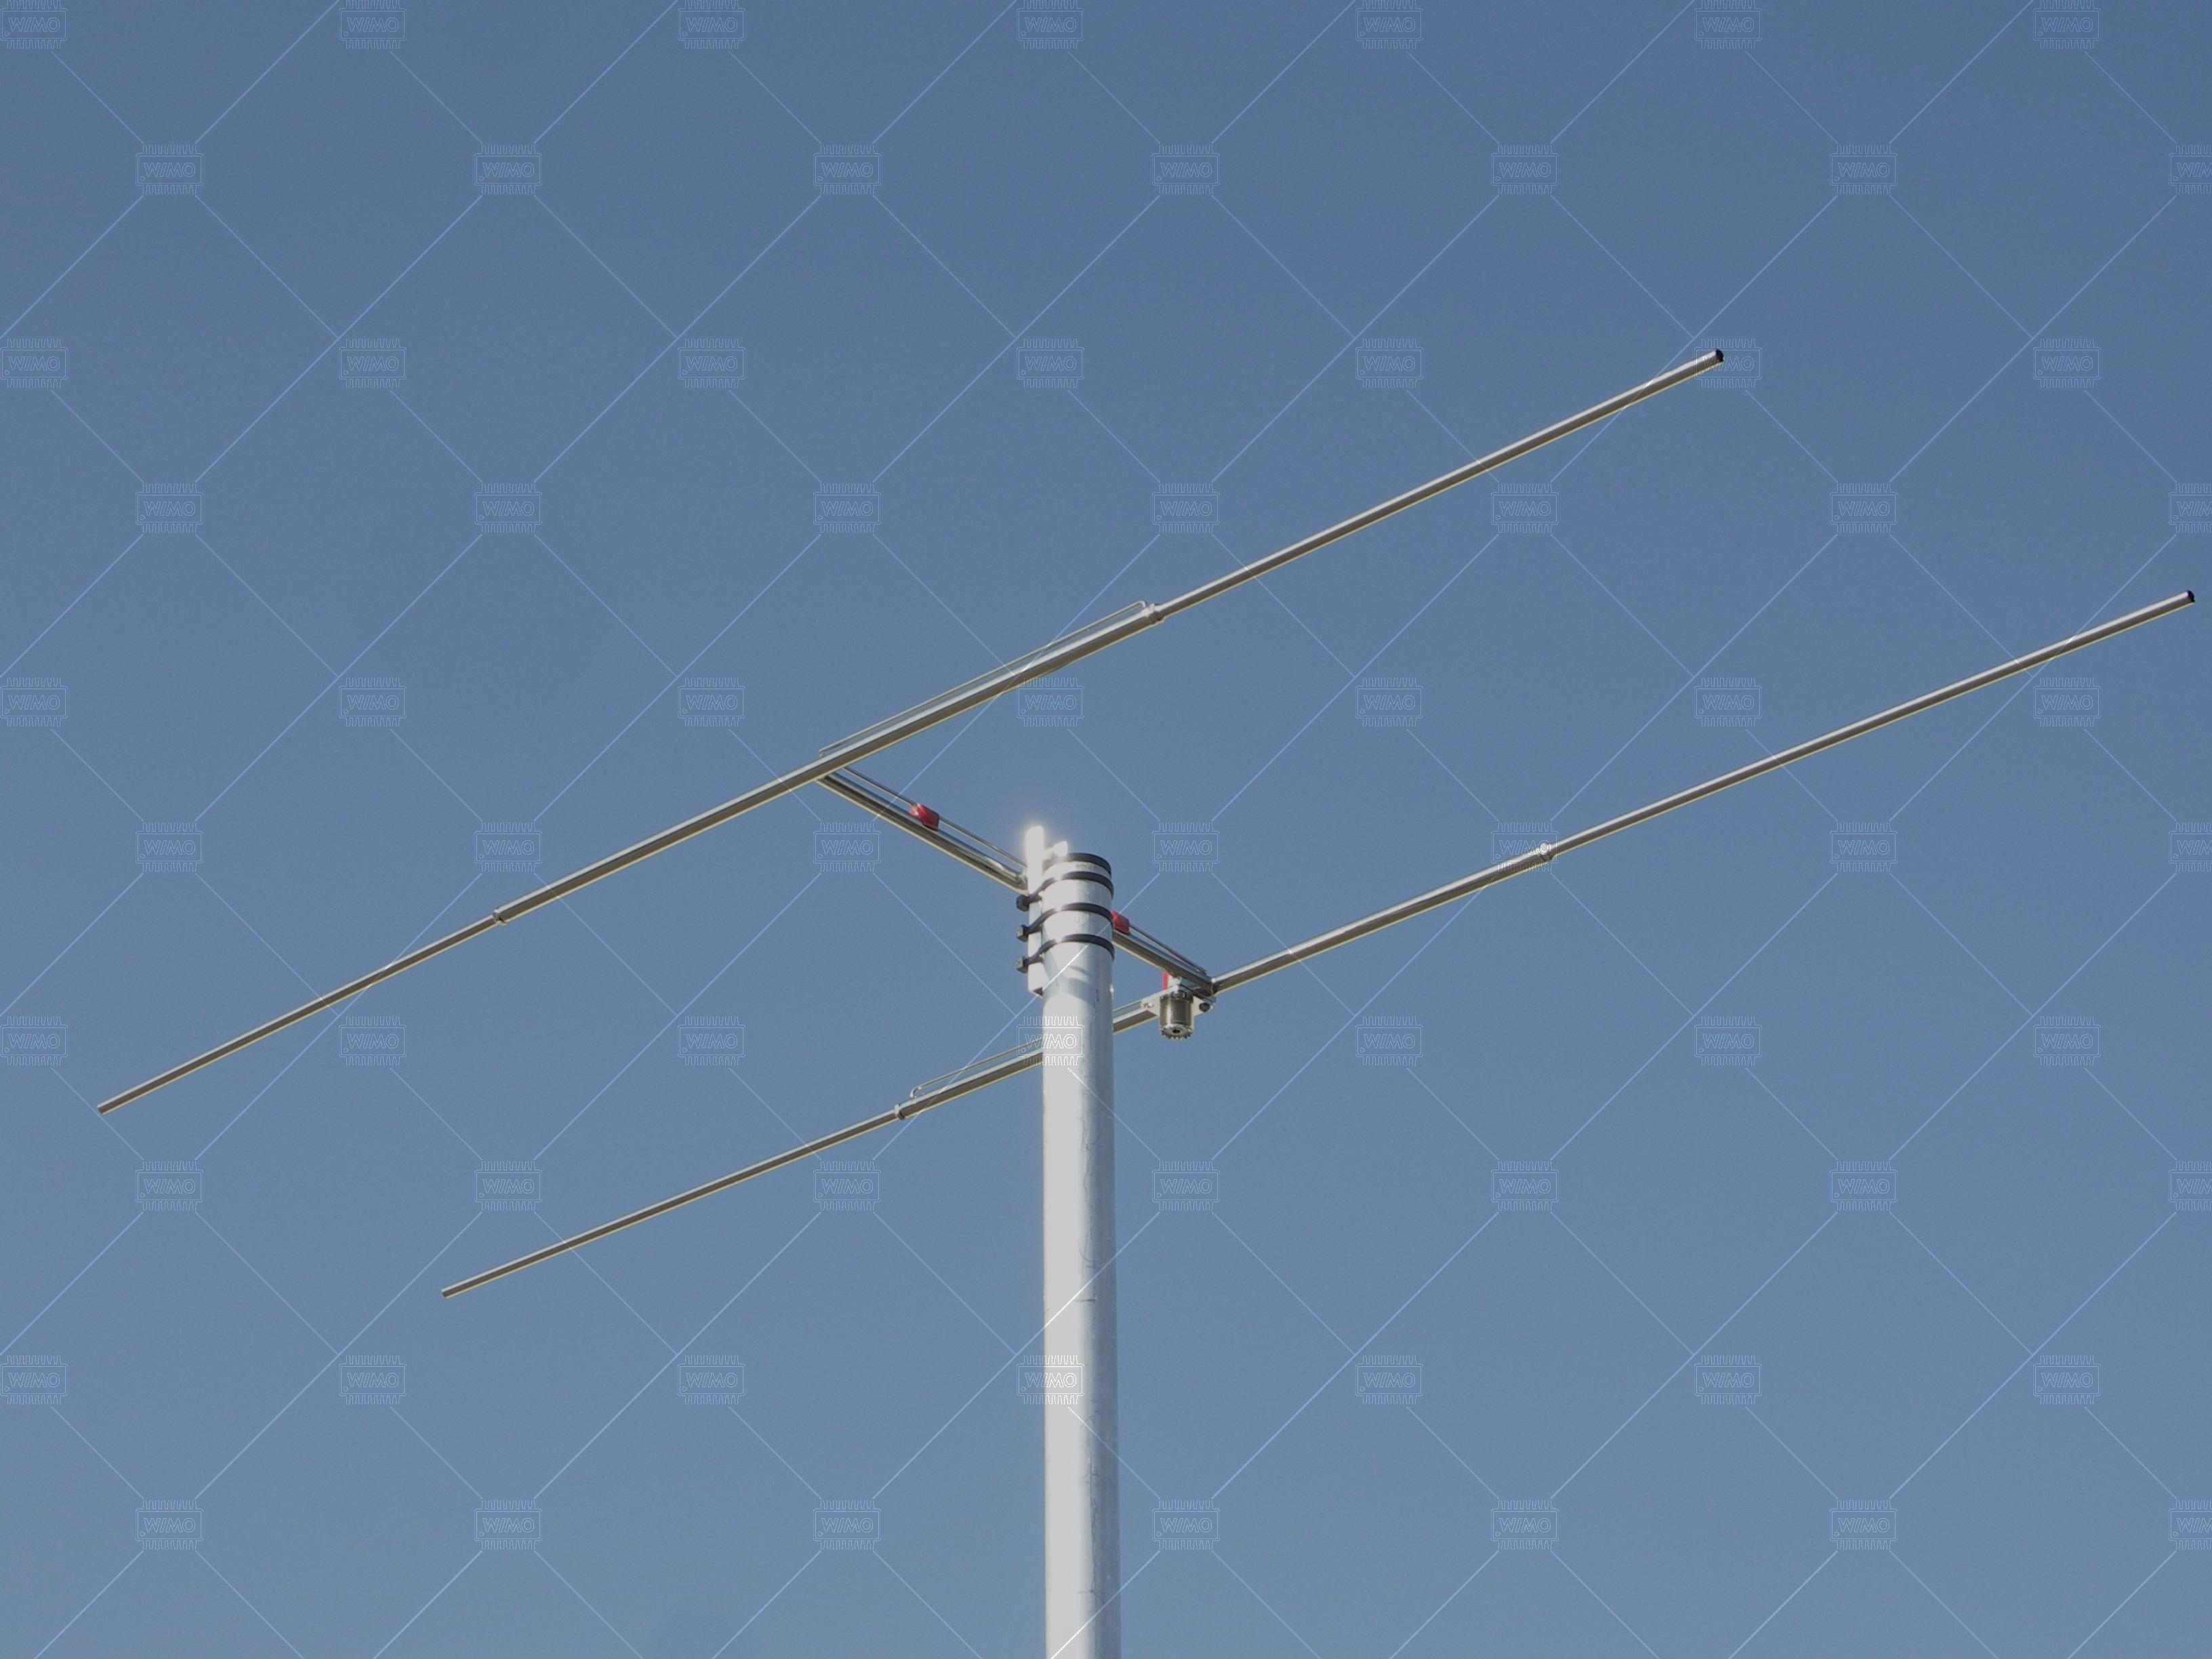 HB9CV Antenna 144 MHz